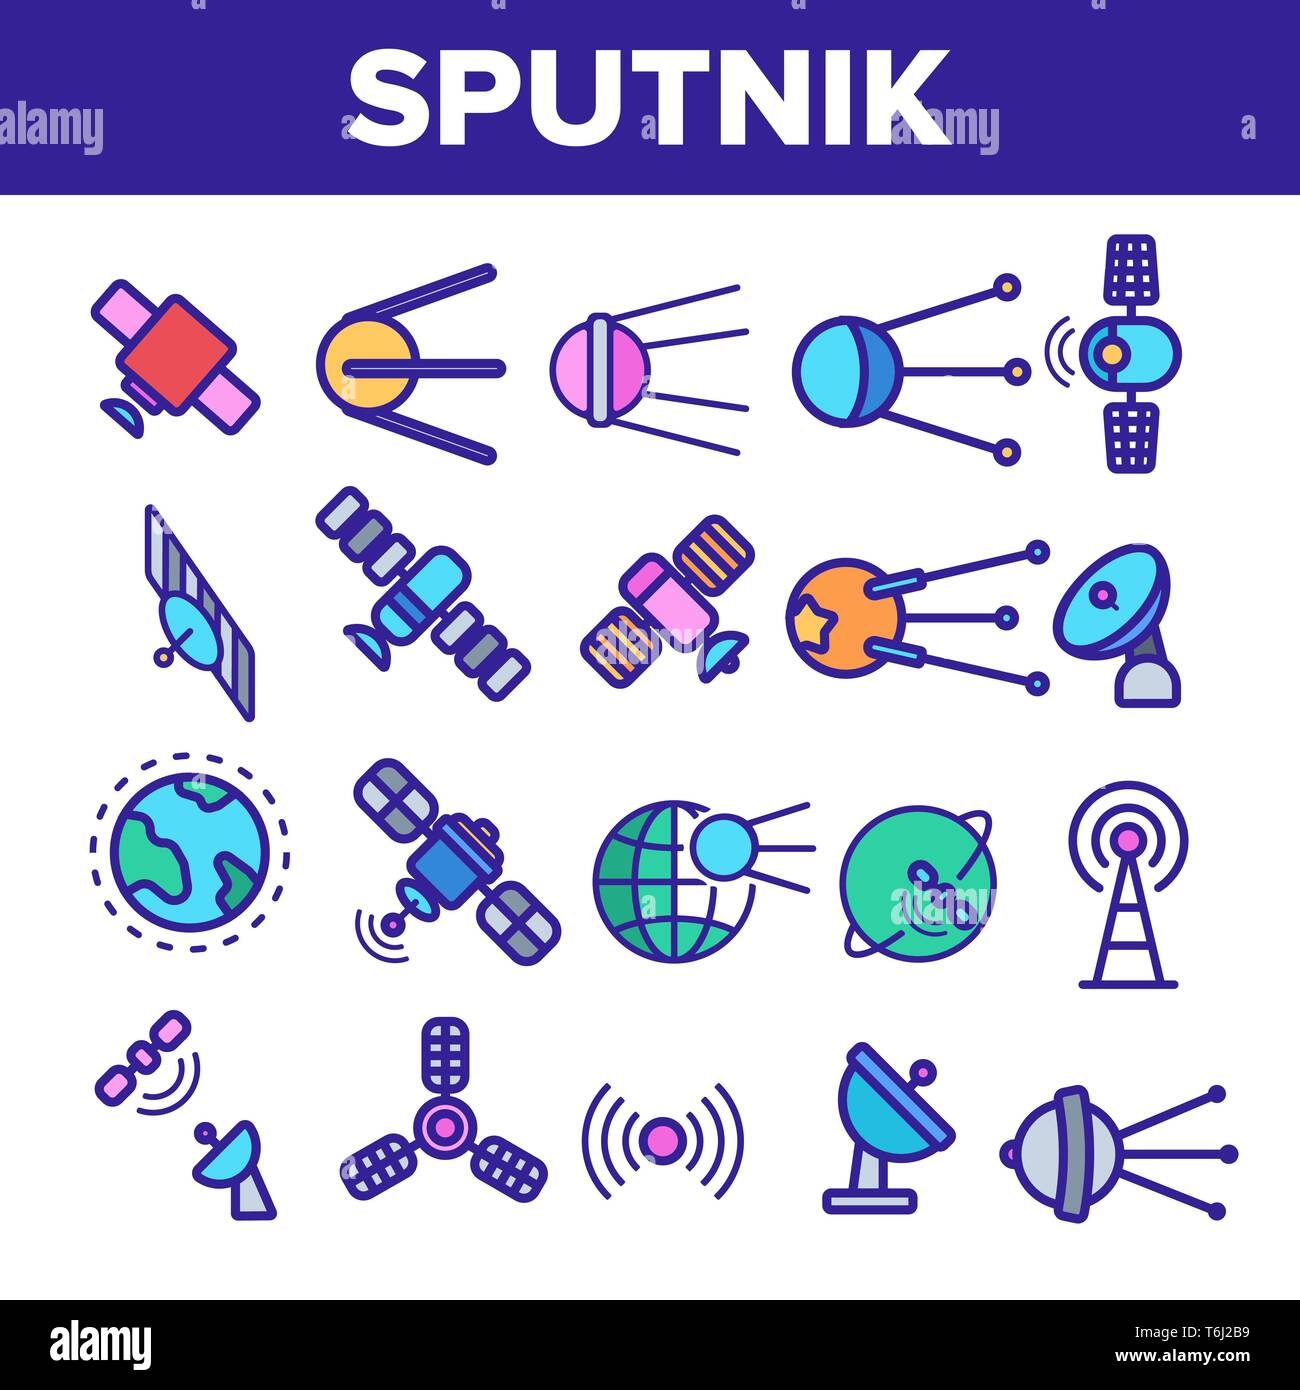 Orbital Sputnik Linear Vector Icons Set. Sputnik Thin Line Contour Symbols. Cosmos Exploration, Astronautics Pictograms Collection. Satellite Dish, Sp Stock Vector